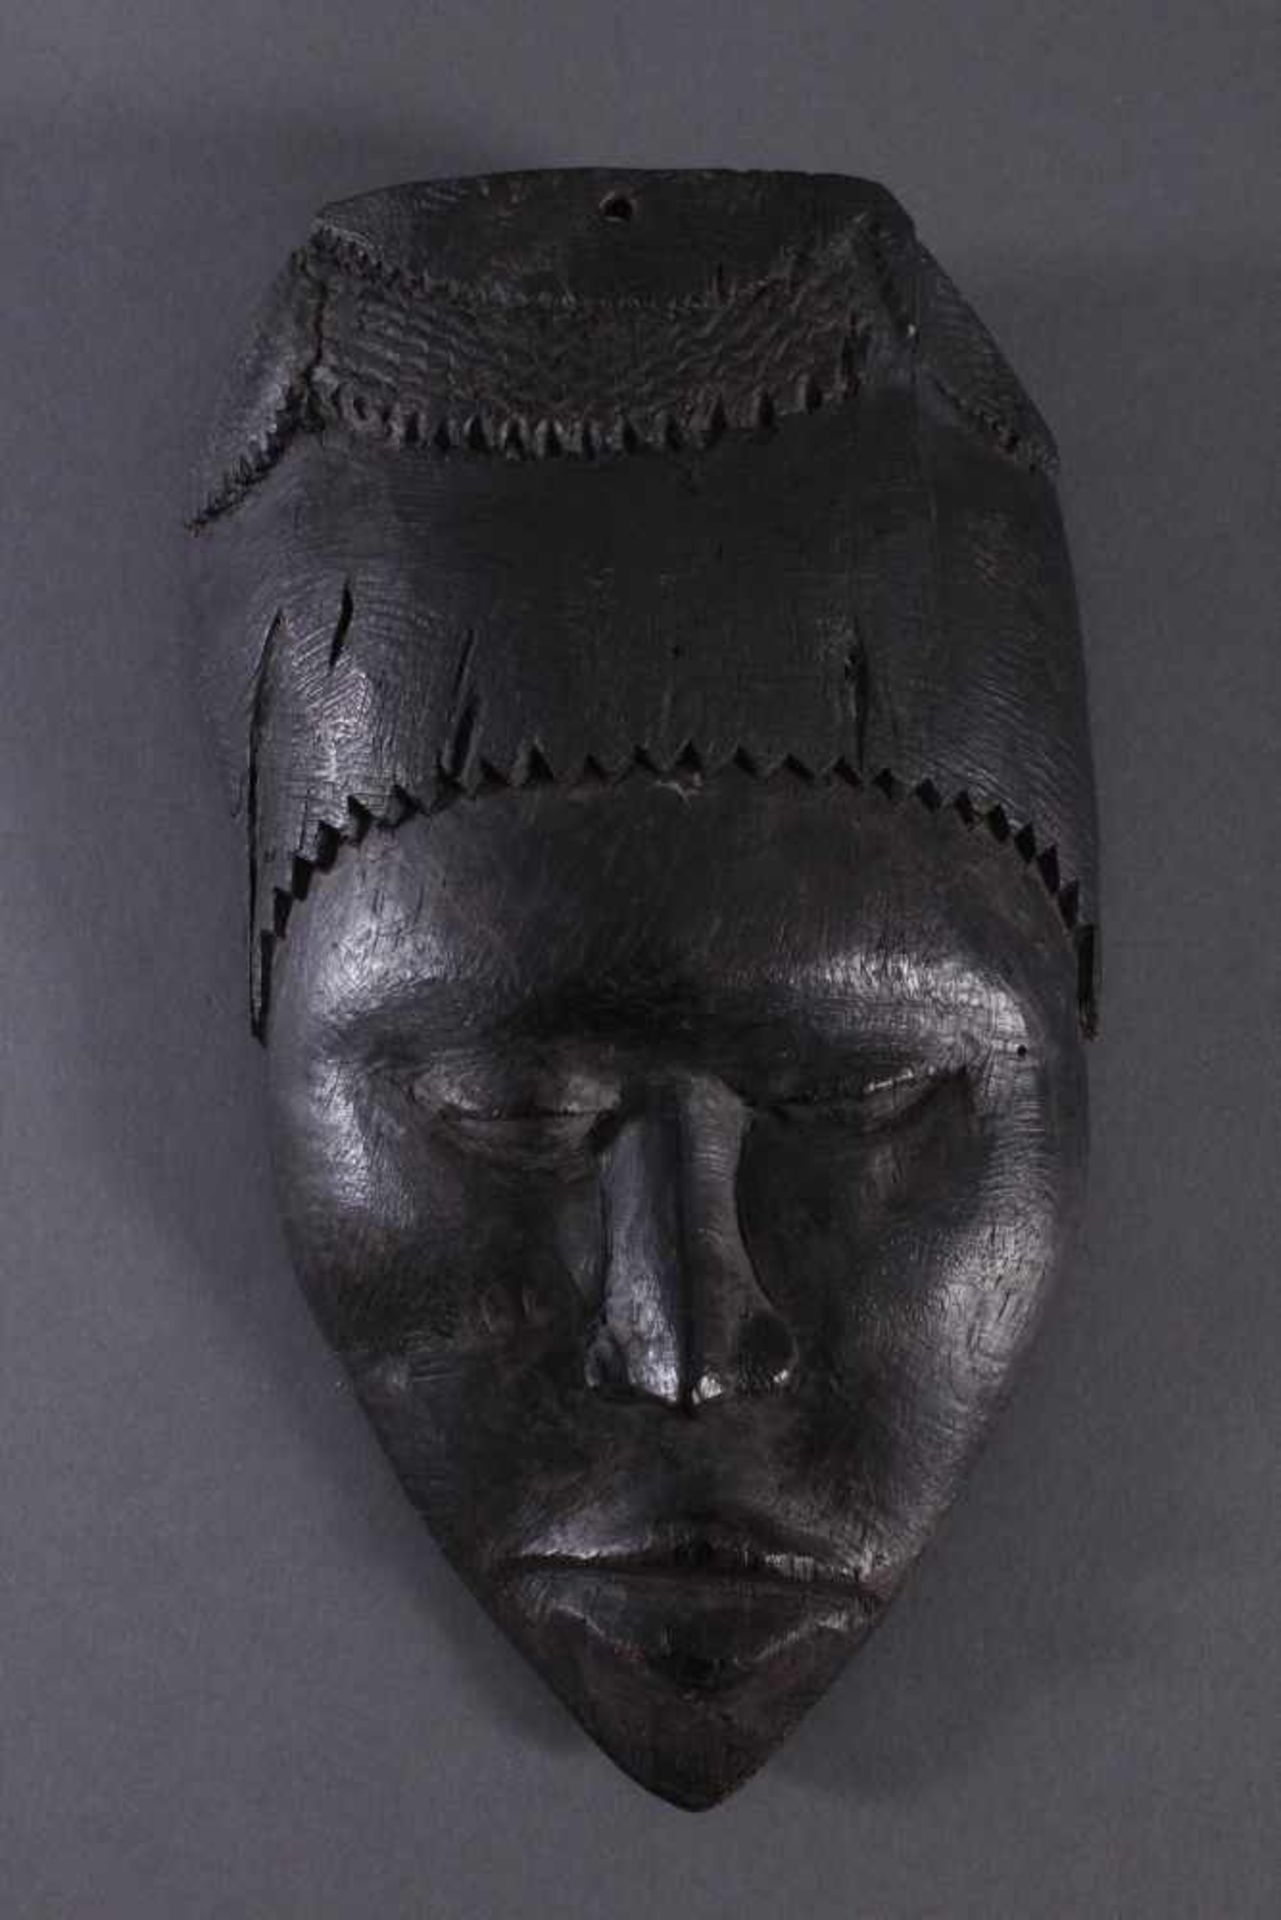 Antike WandmaskeHolz, geschnitzt, dunkel patiniert, ca. 28 cm- - -20.00 % buyer's premium on the